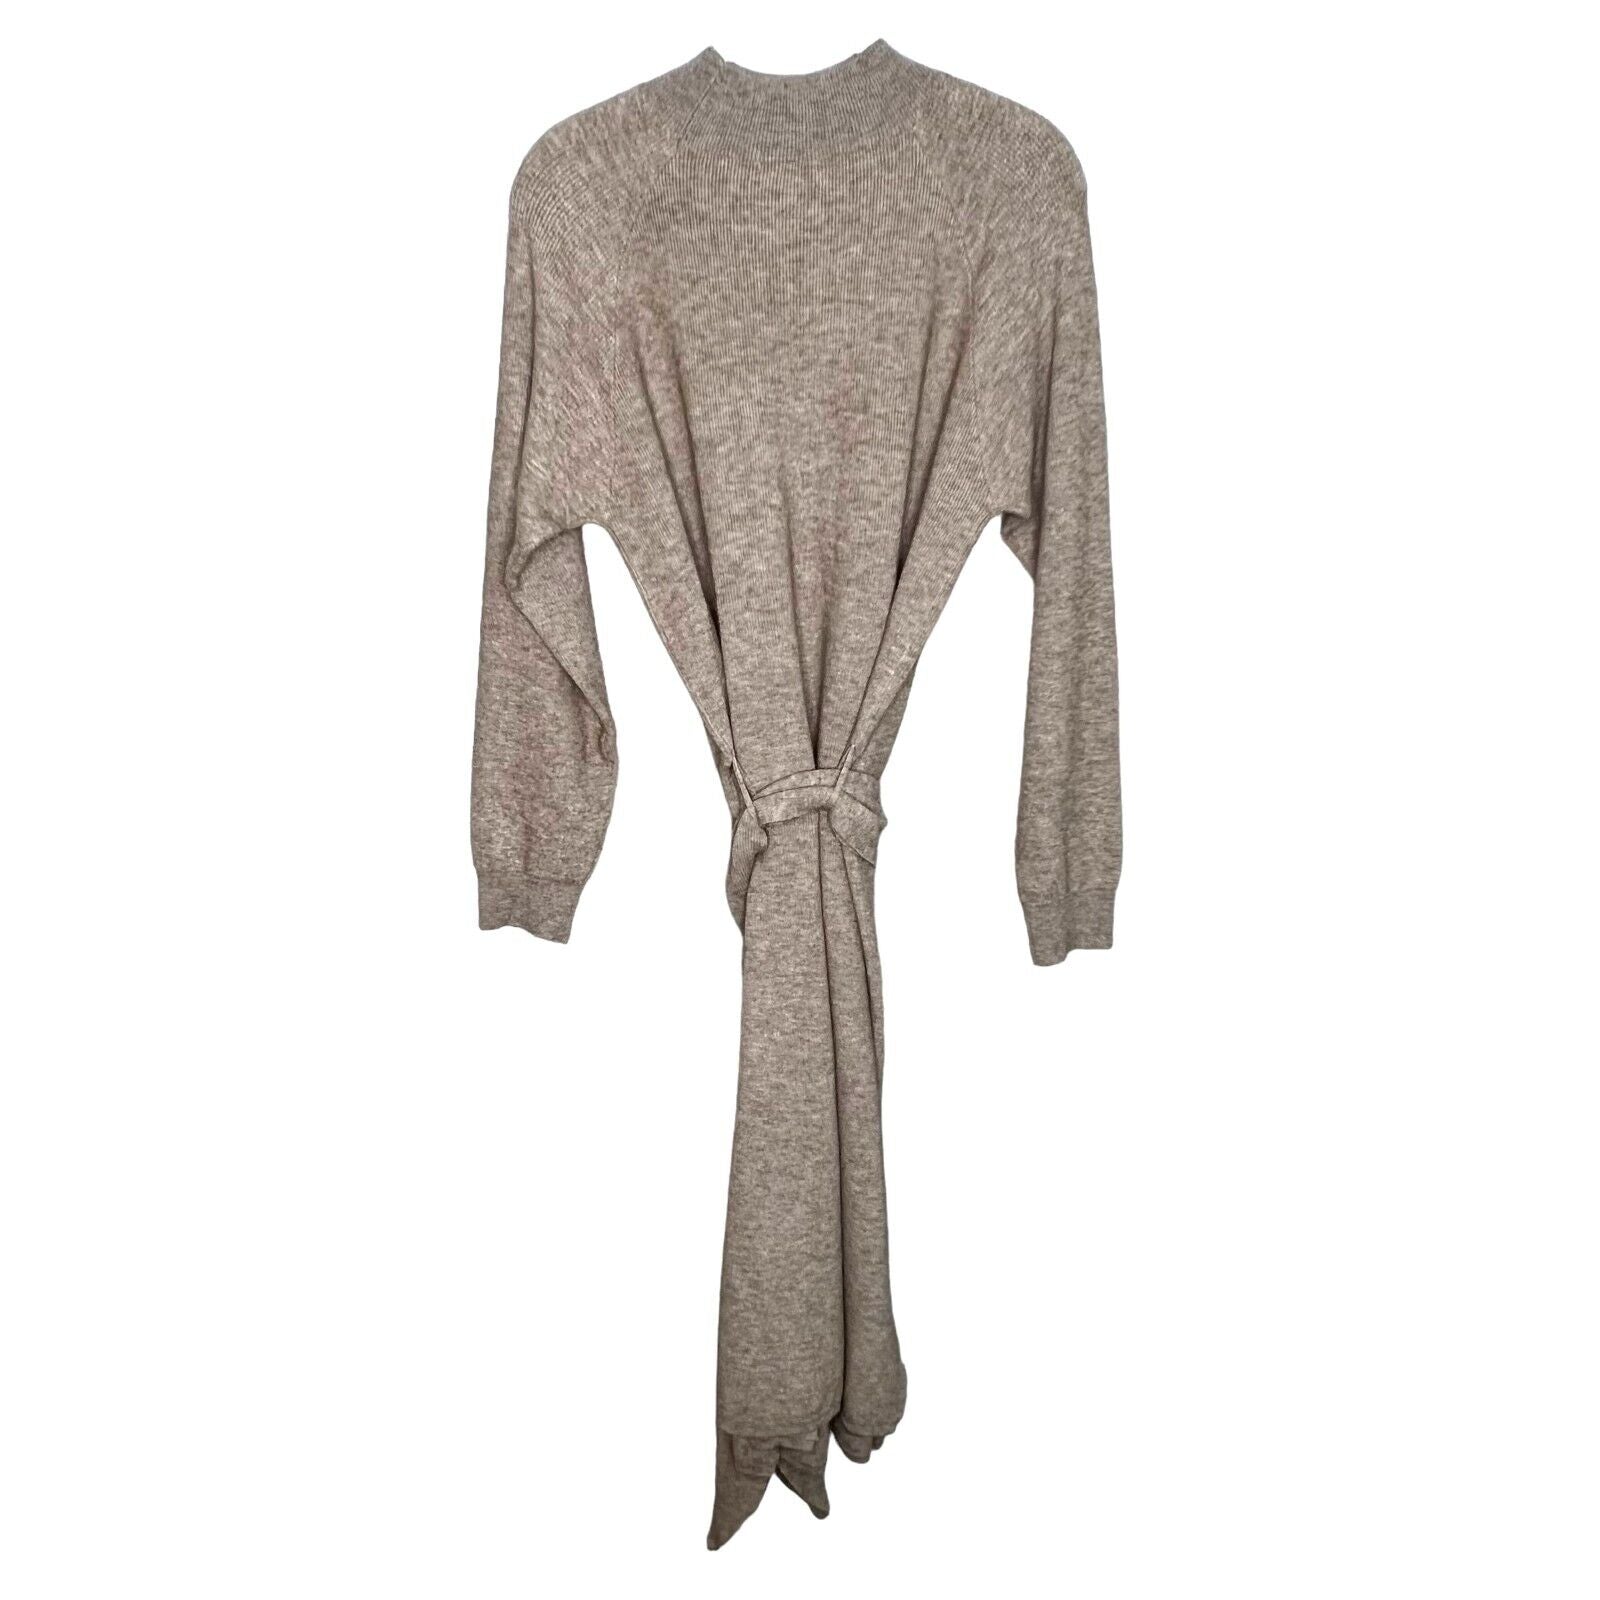 New Lucy Paris Tan Indria Sweater Dress Size Medium